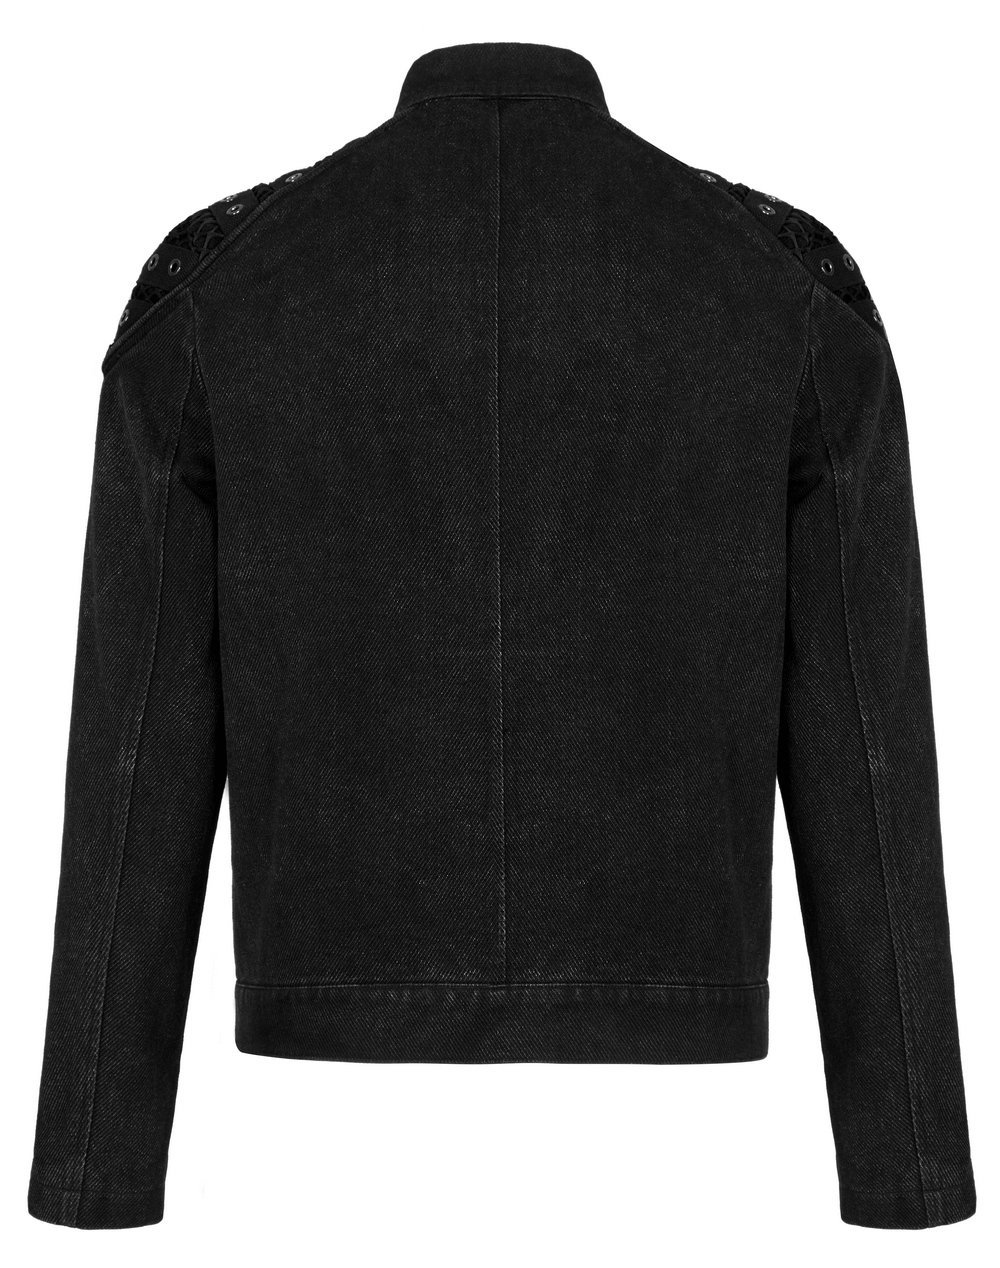 Studded Black Denim Jacket - Urban Gothic Style - HARD'N'HEAVY